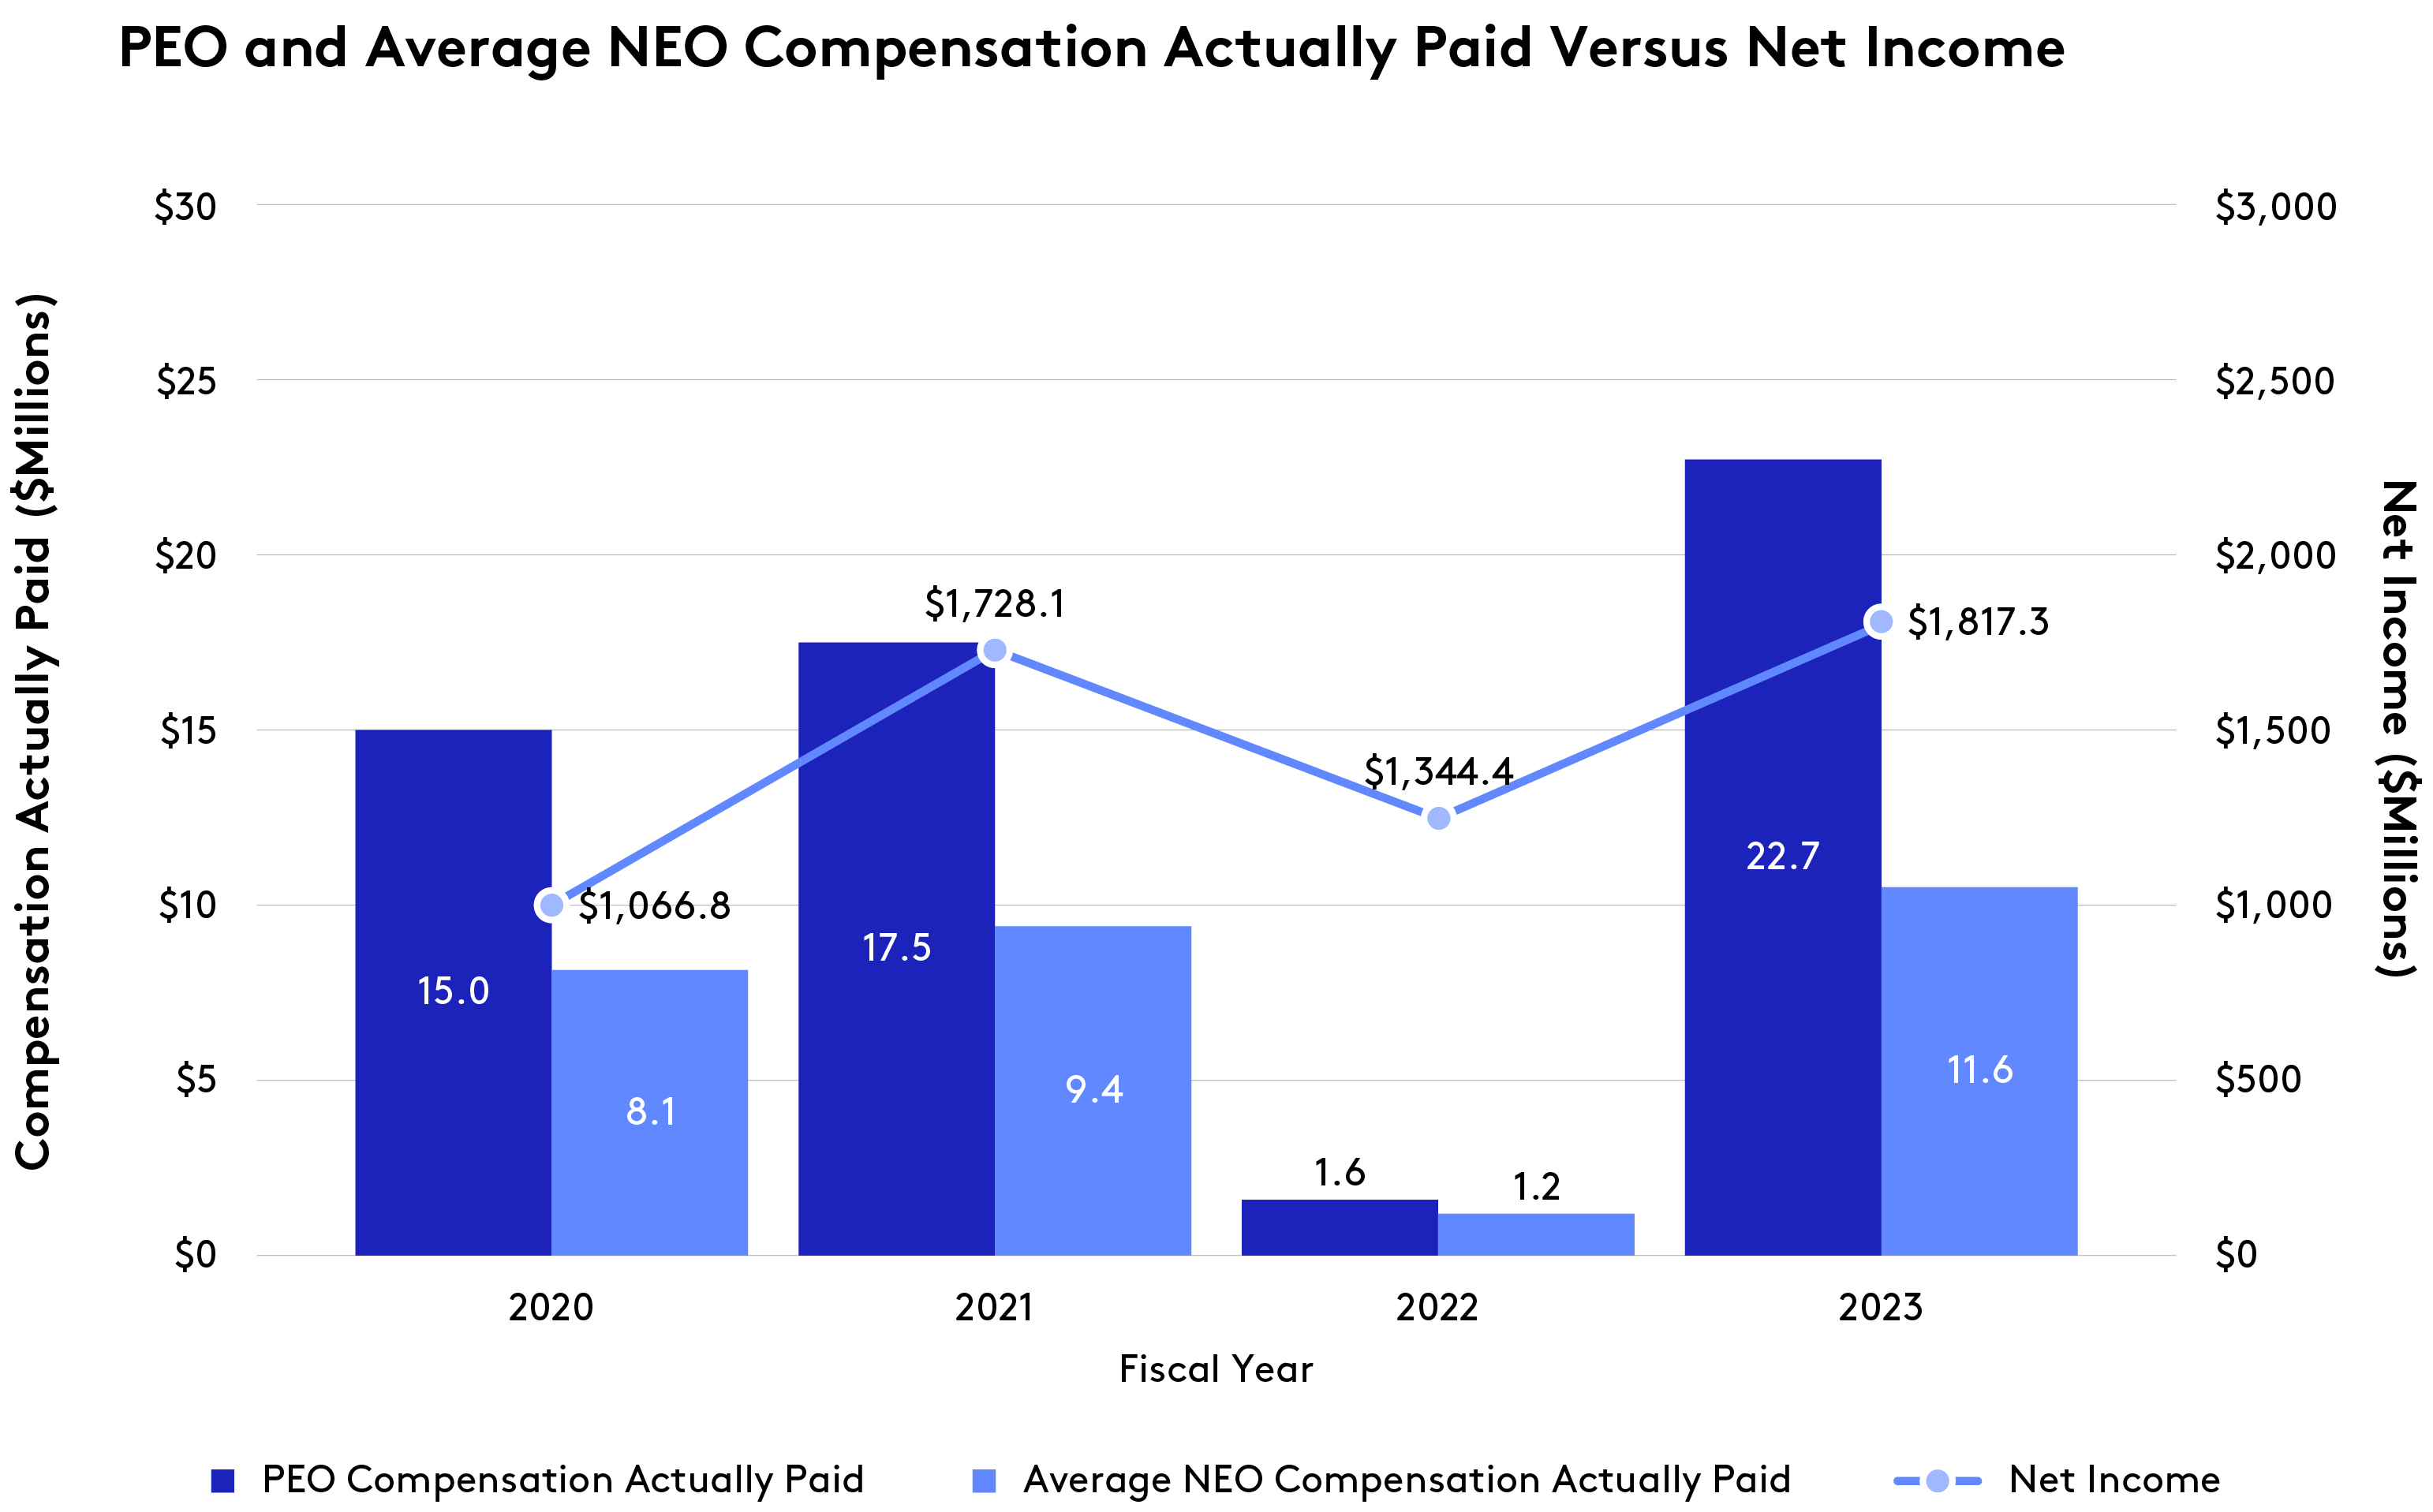 2023_PEO_AverageNEO-Compensation_NetIncome_R4.jpg